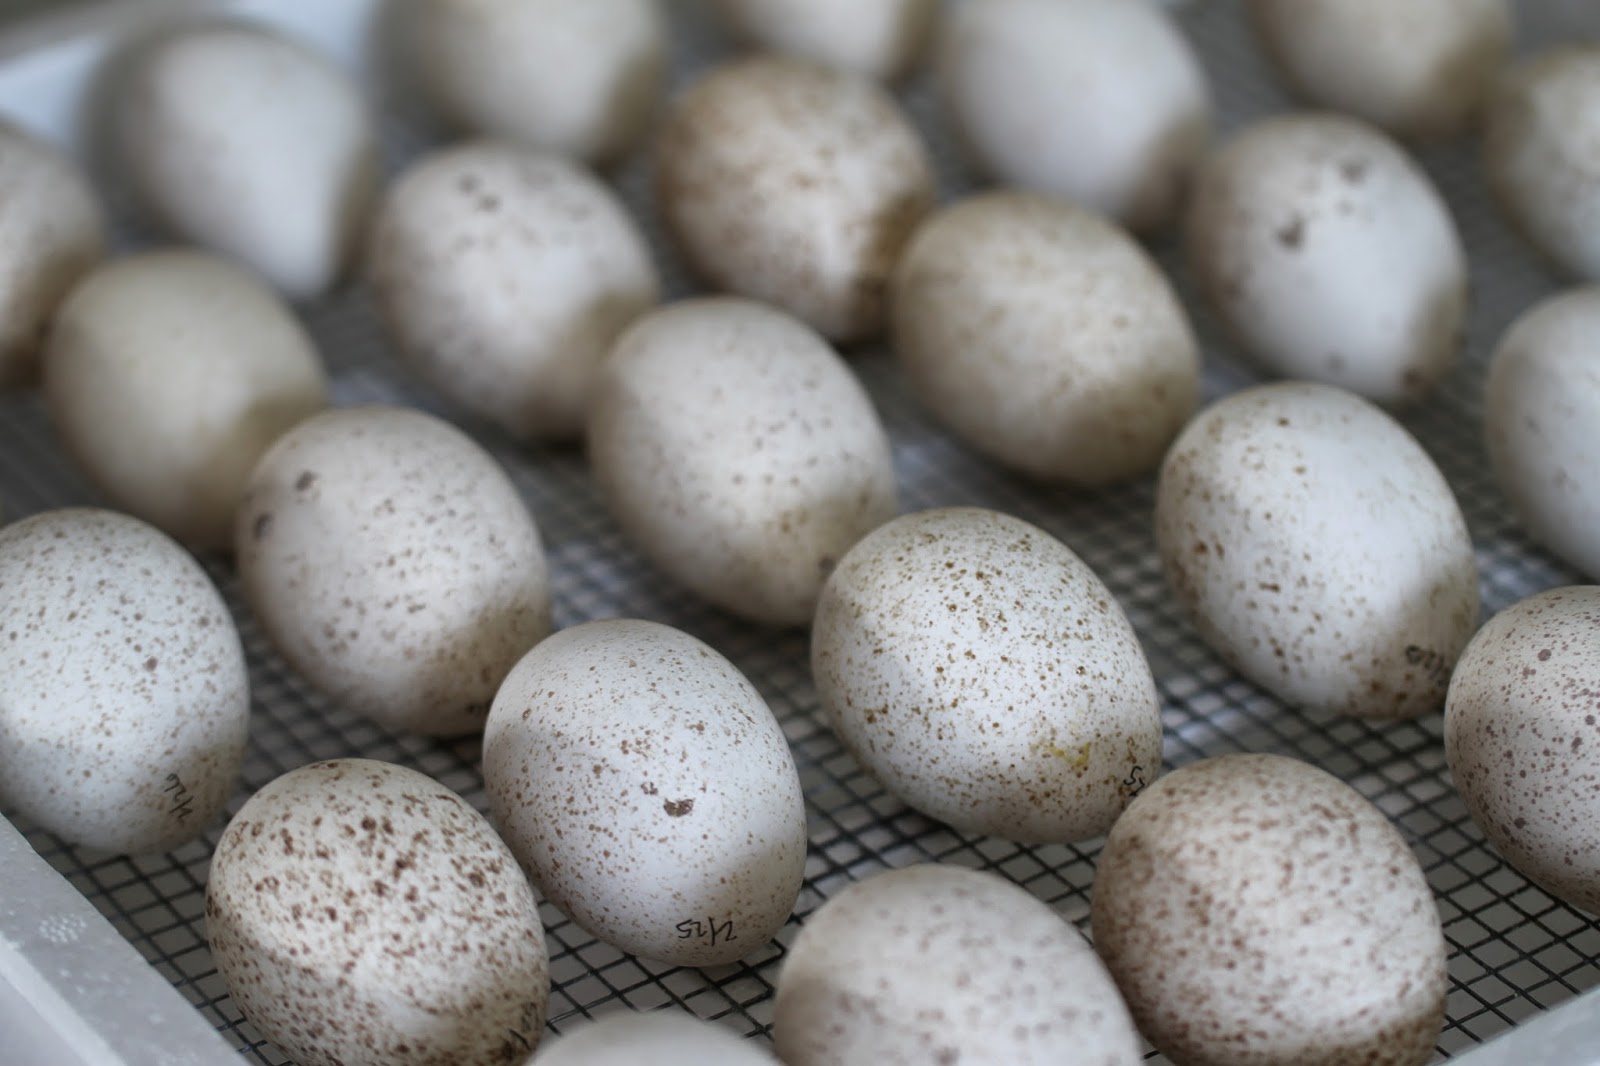 30 Sweetgrass turkey eggs incubating